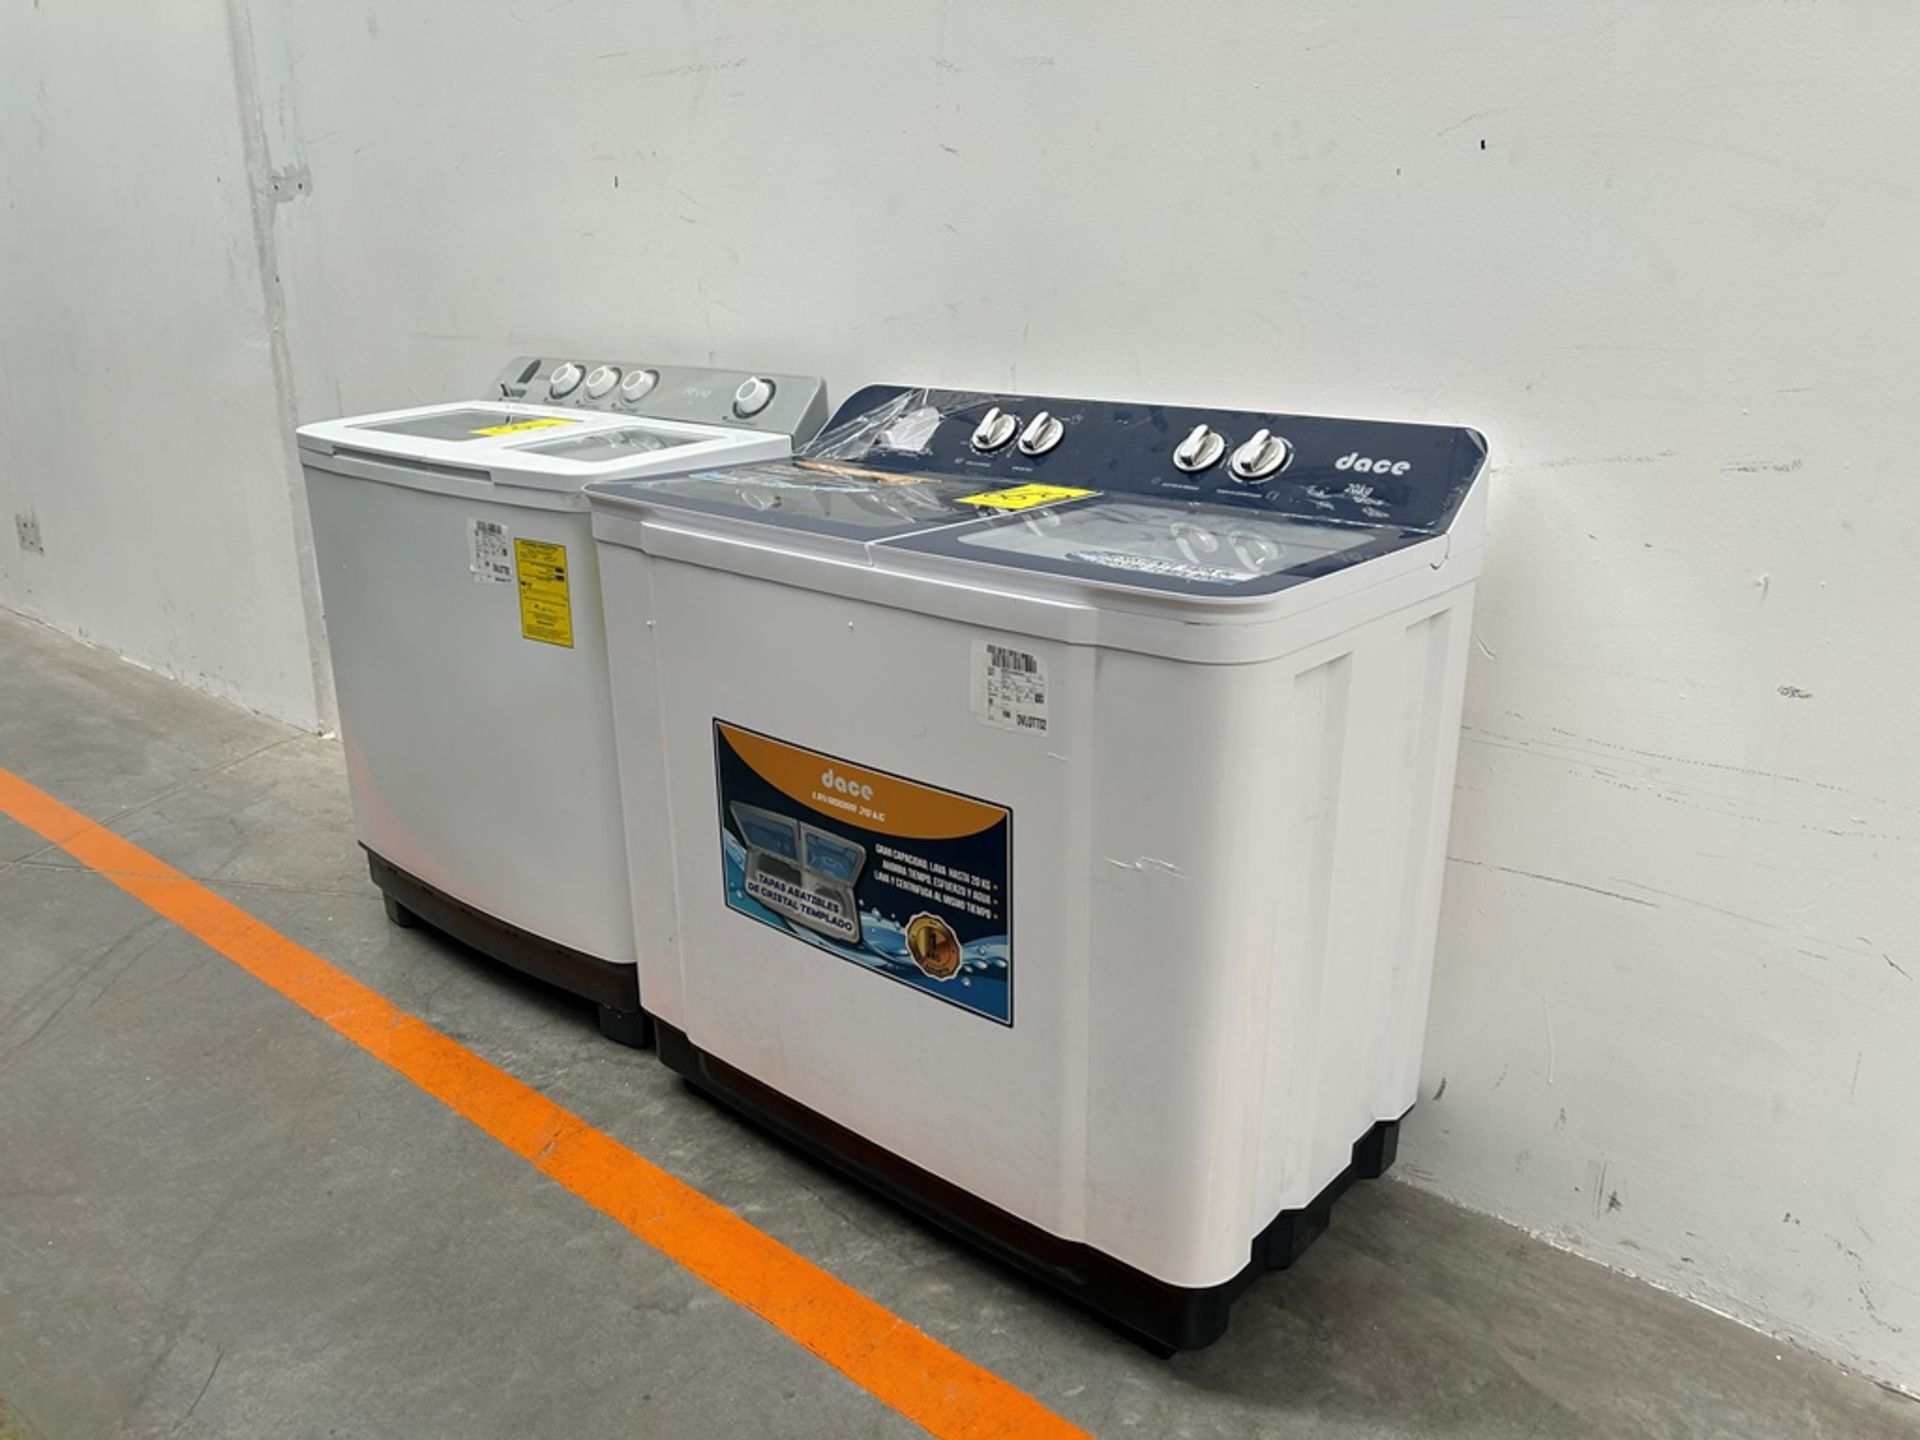 Lote de 2 lavadoras contiene: 1 Lavadora de 20 KG, Marca DACE, Modelo LS2002C, Serie 9669, Color BL - Image 2 of 8